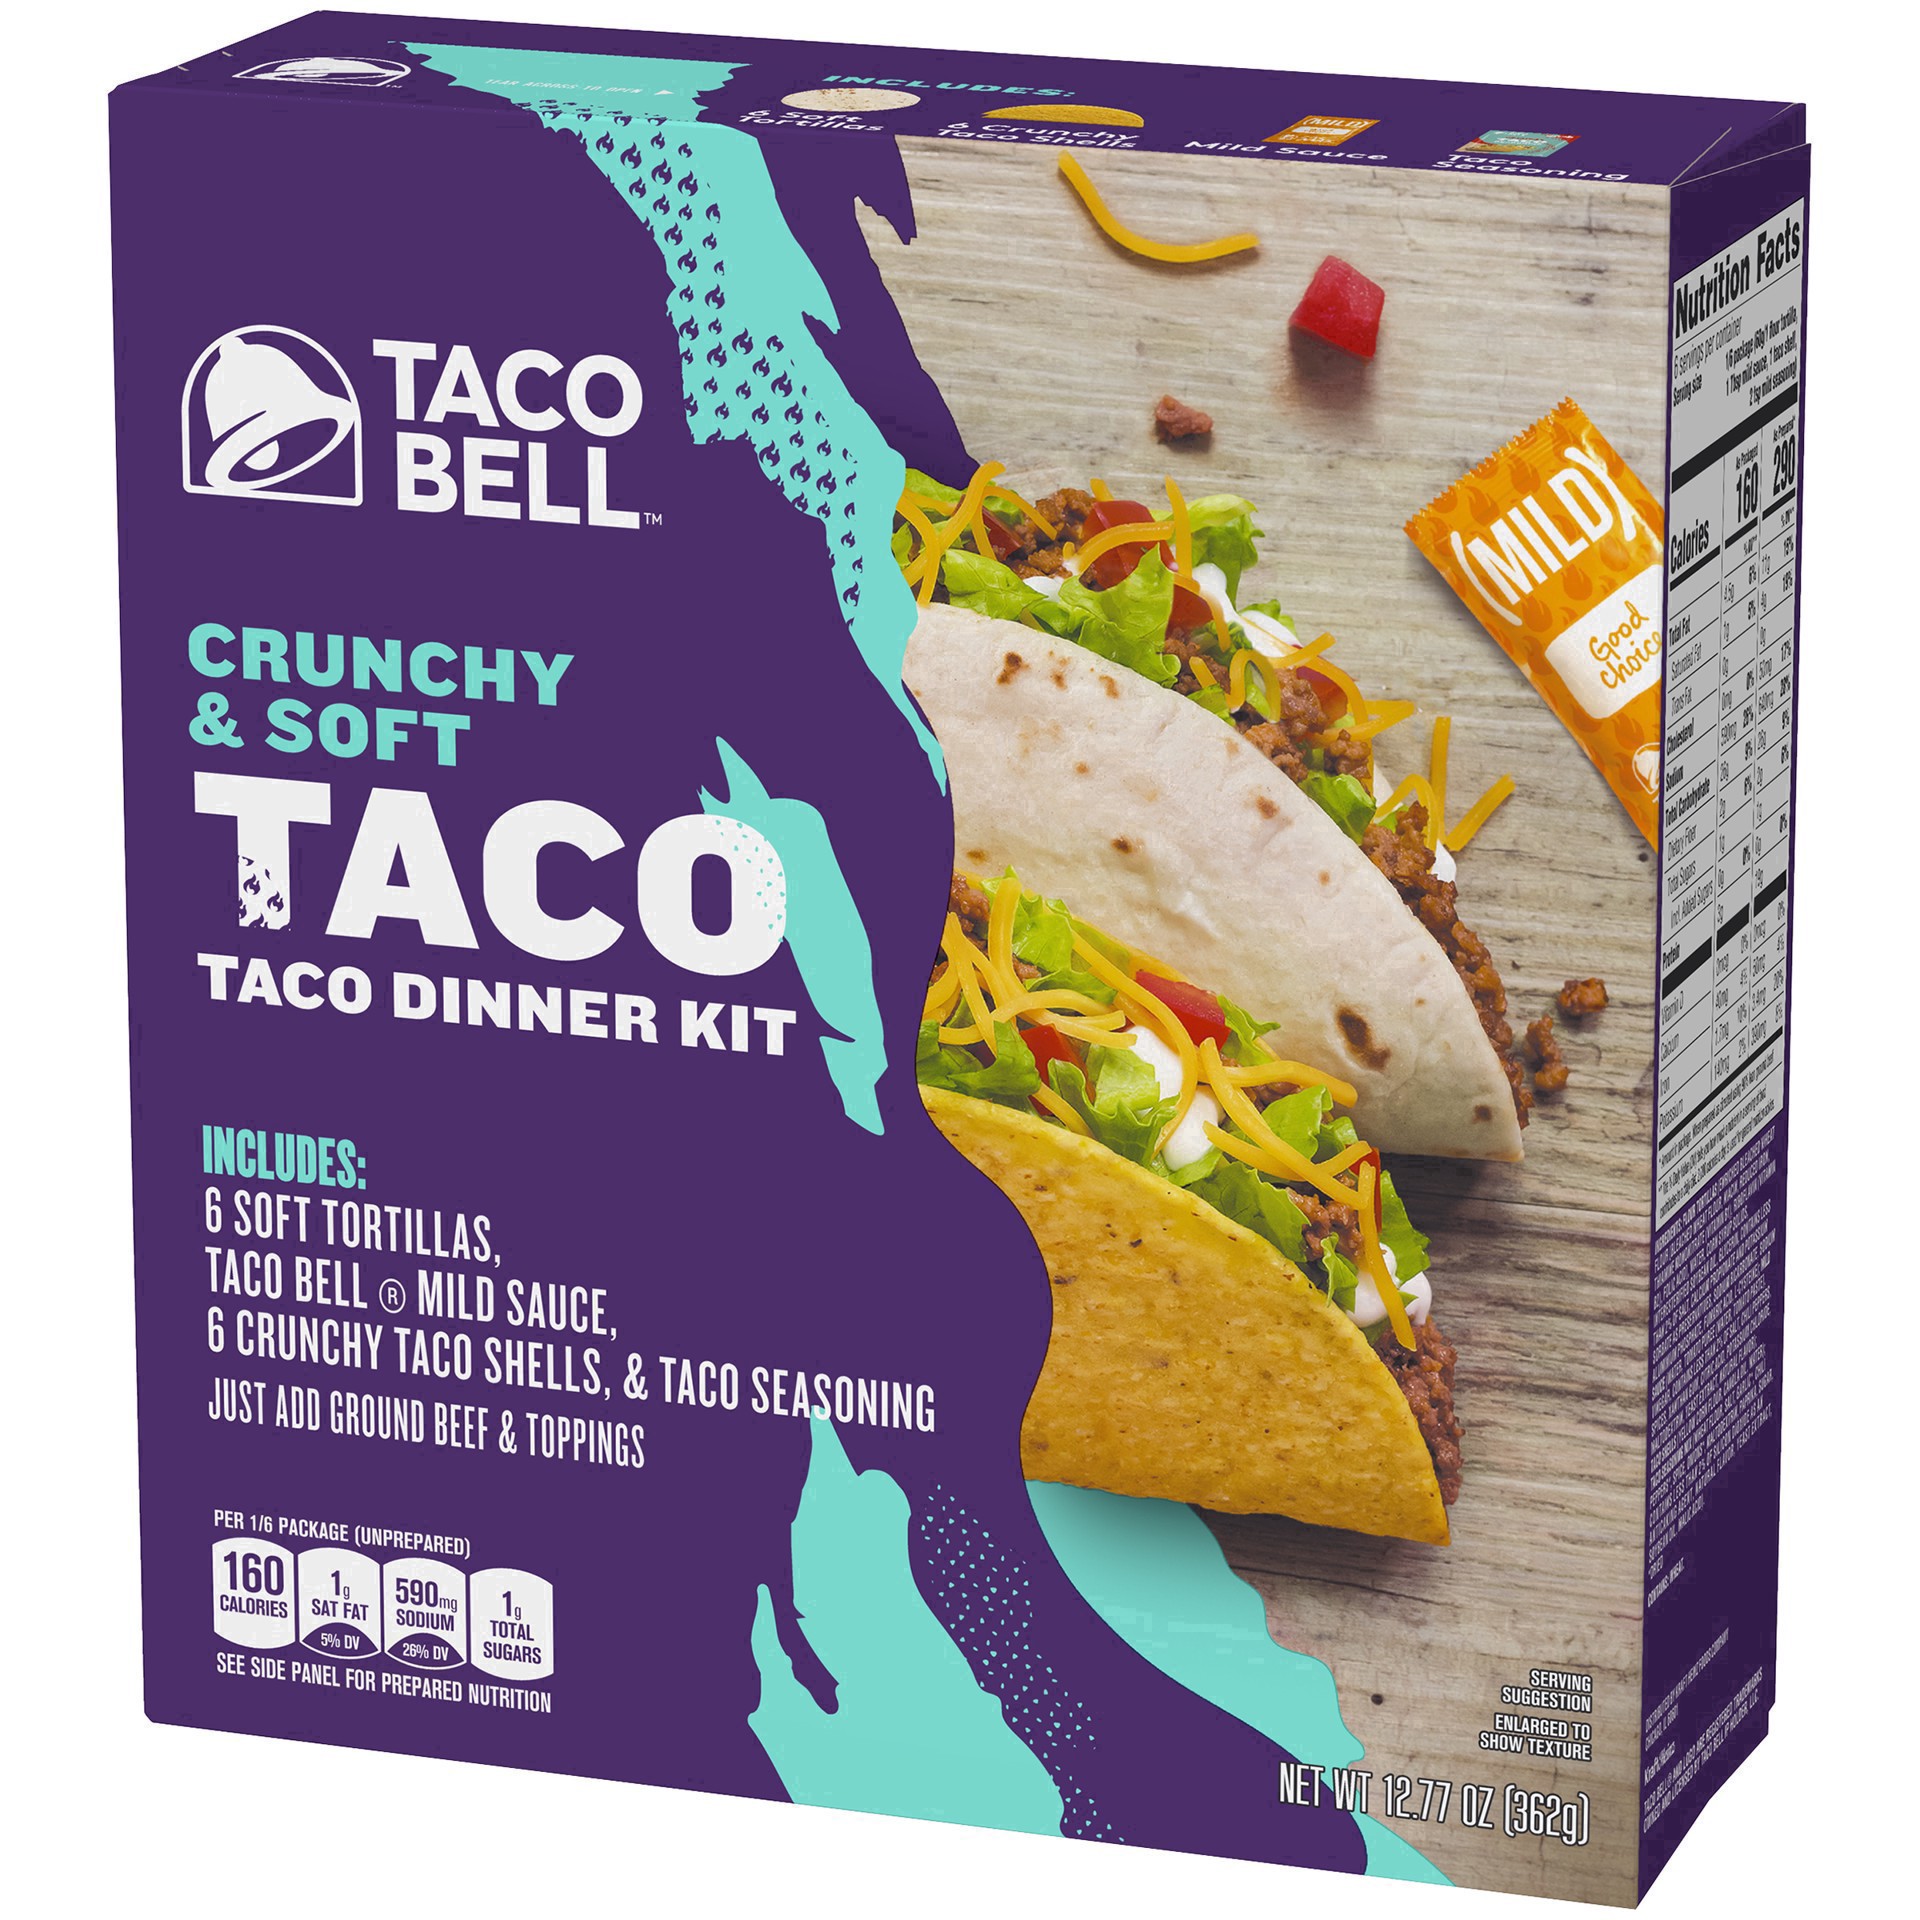 slide 89 of 101, Taco Bell Crunchy & Soft Taco Cravings Kit with 6 Soft Tortillas, 6 Crunchy Taco Shells, Taco Bell Mild Sauce & Seasoning, 12.77 oz Box, 1 ea